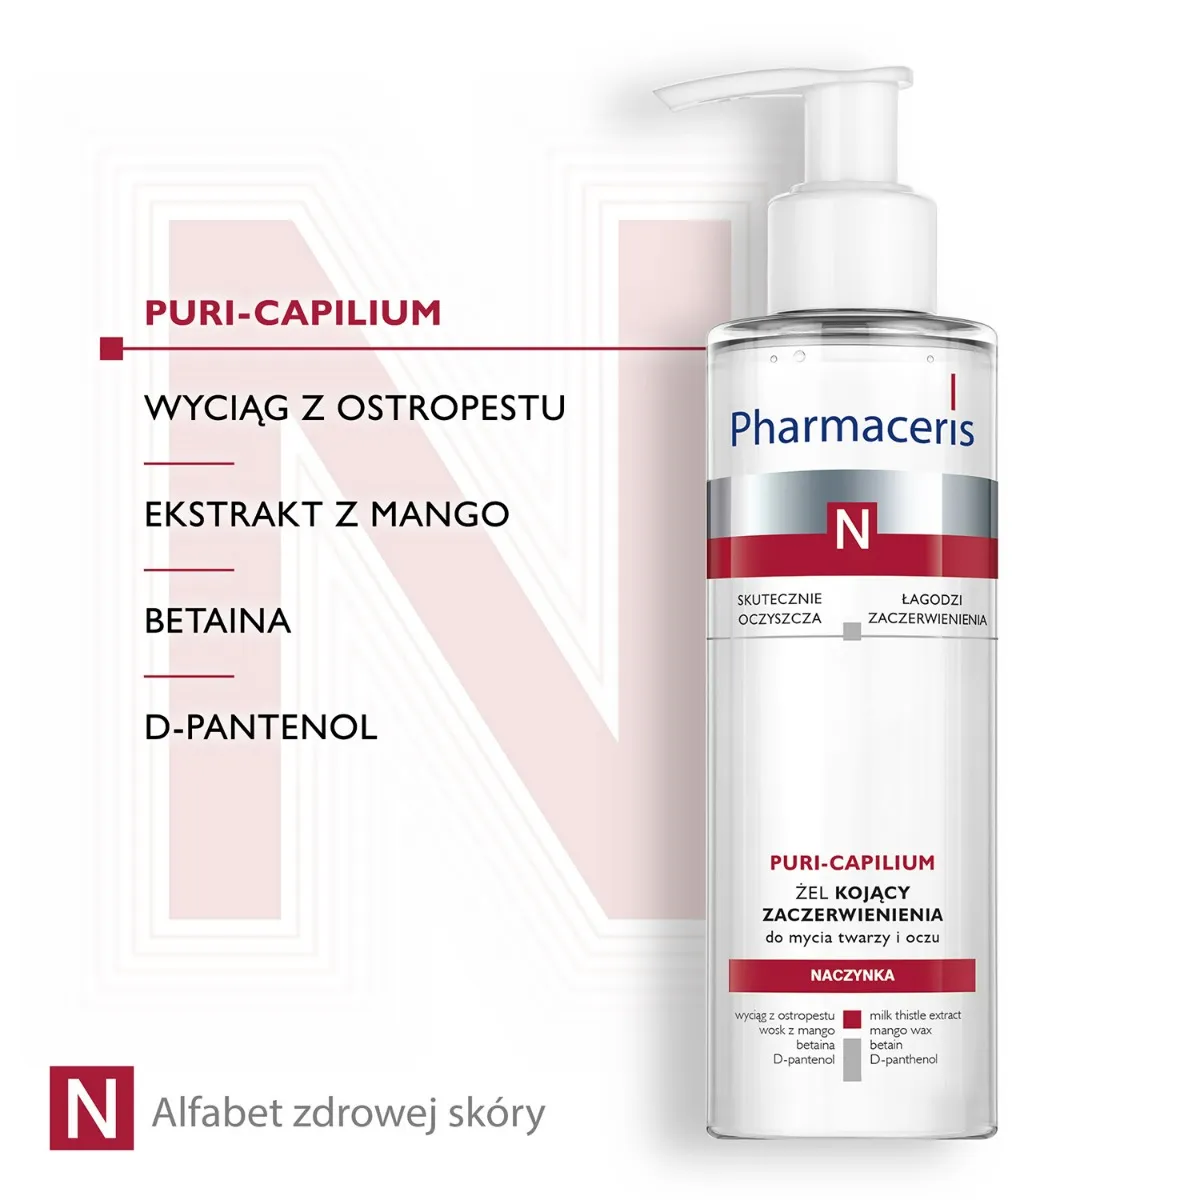 Pharmaceris N Puri-Capilium żel myjący, 190 ml 